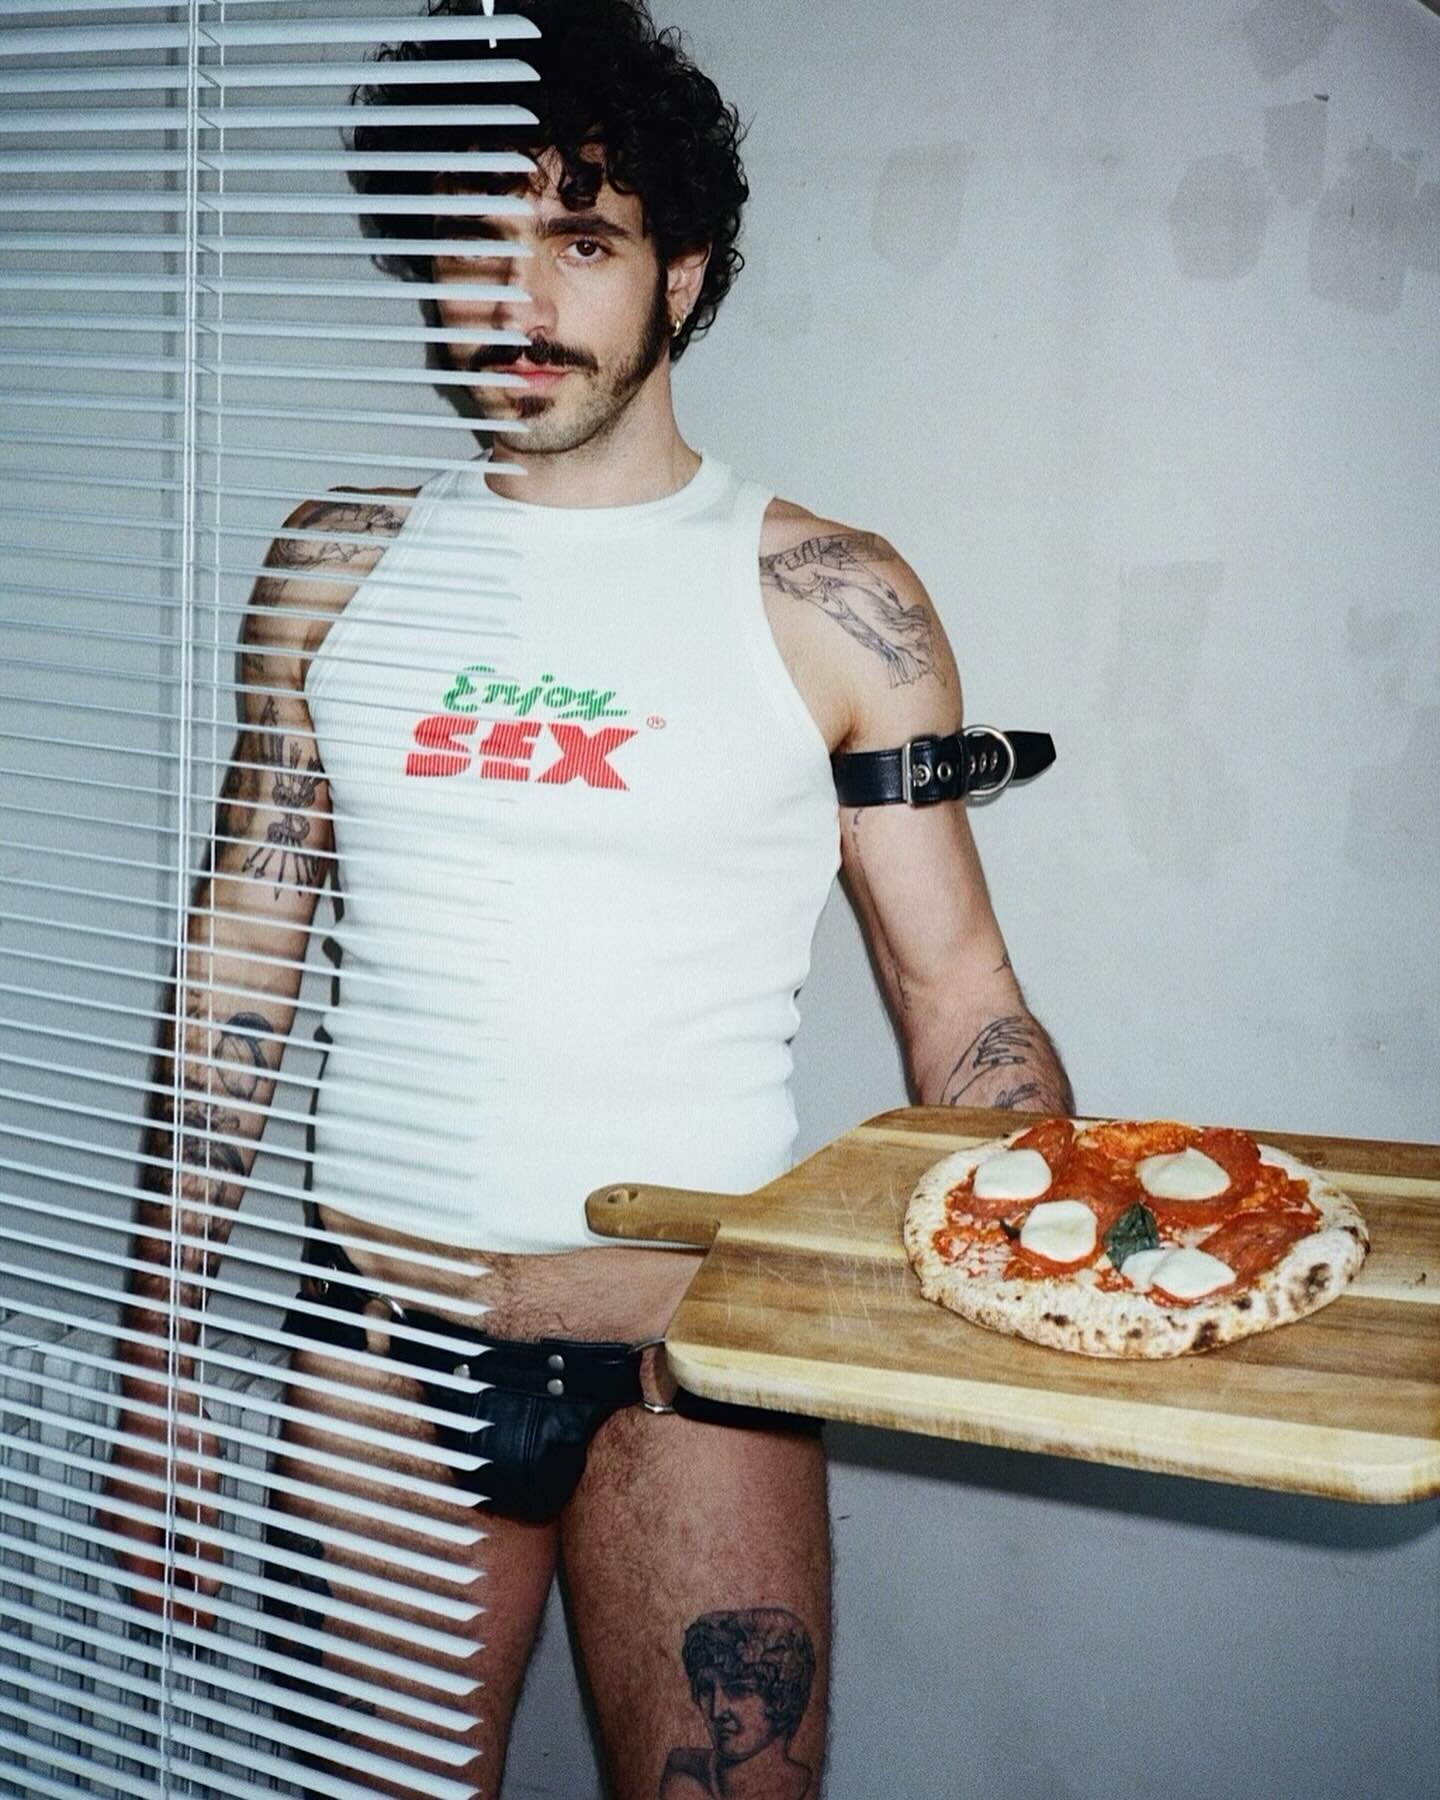 Mr. Pizzaman
📸: @hichristophers